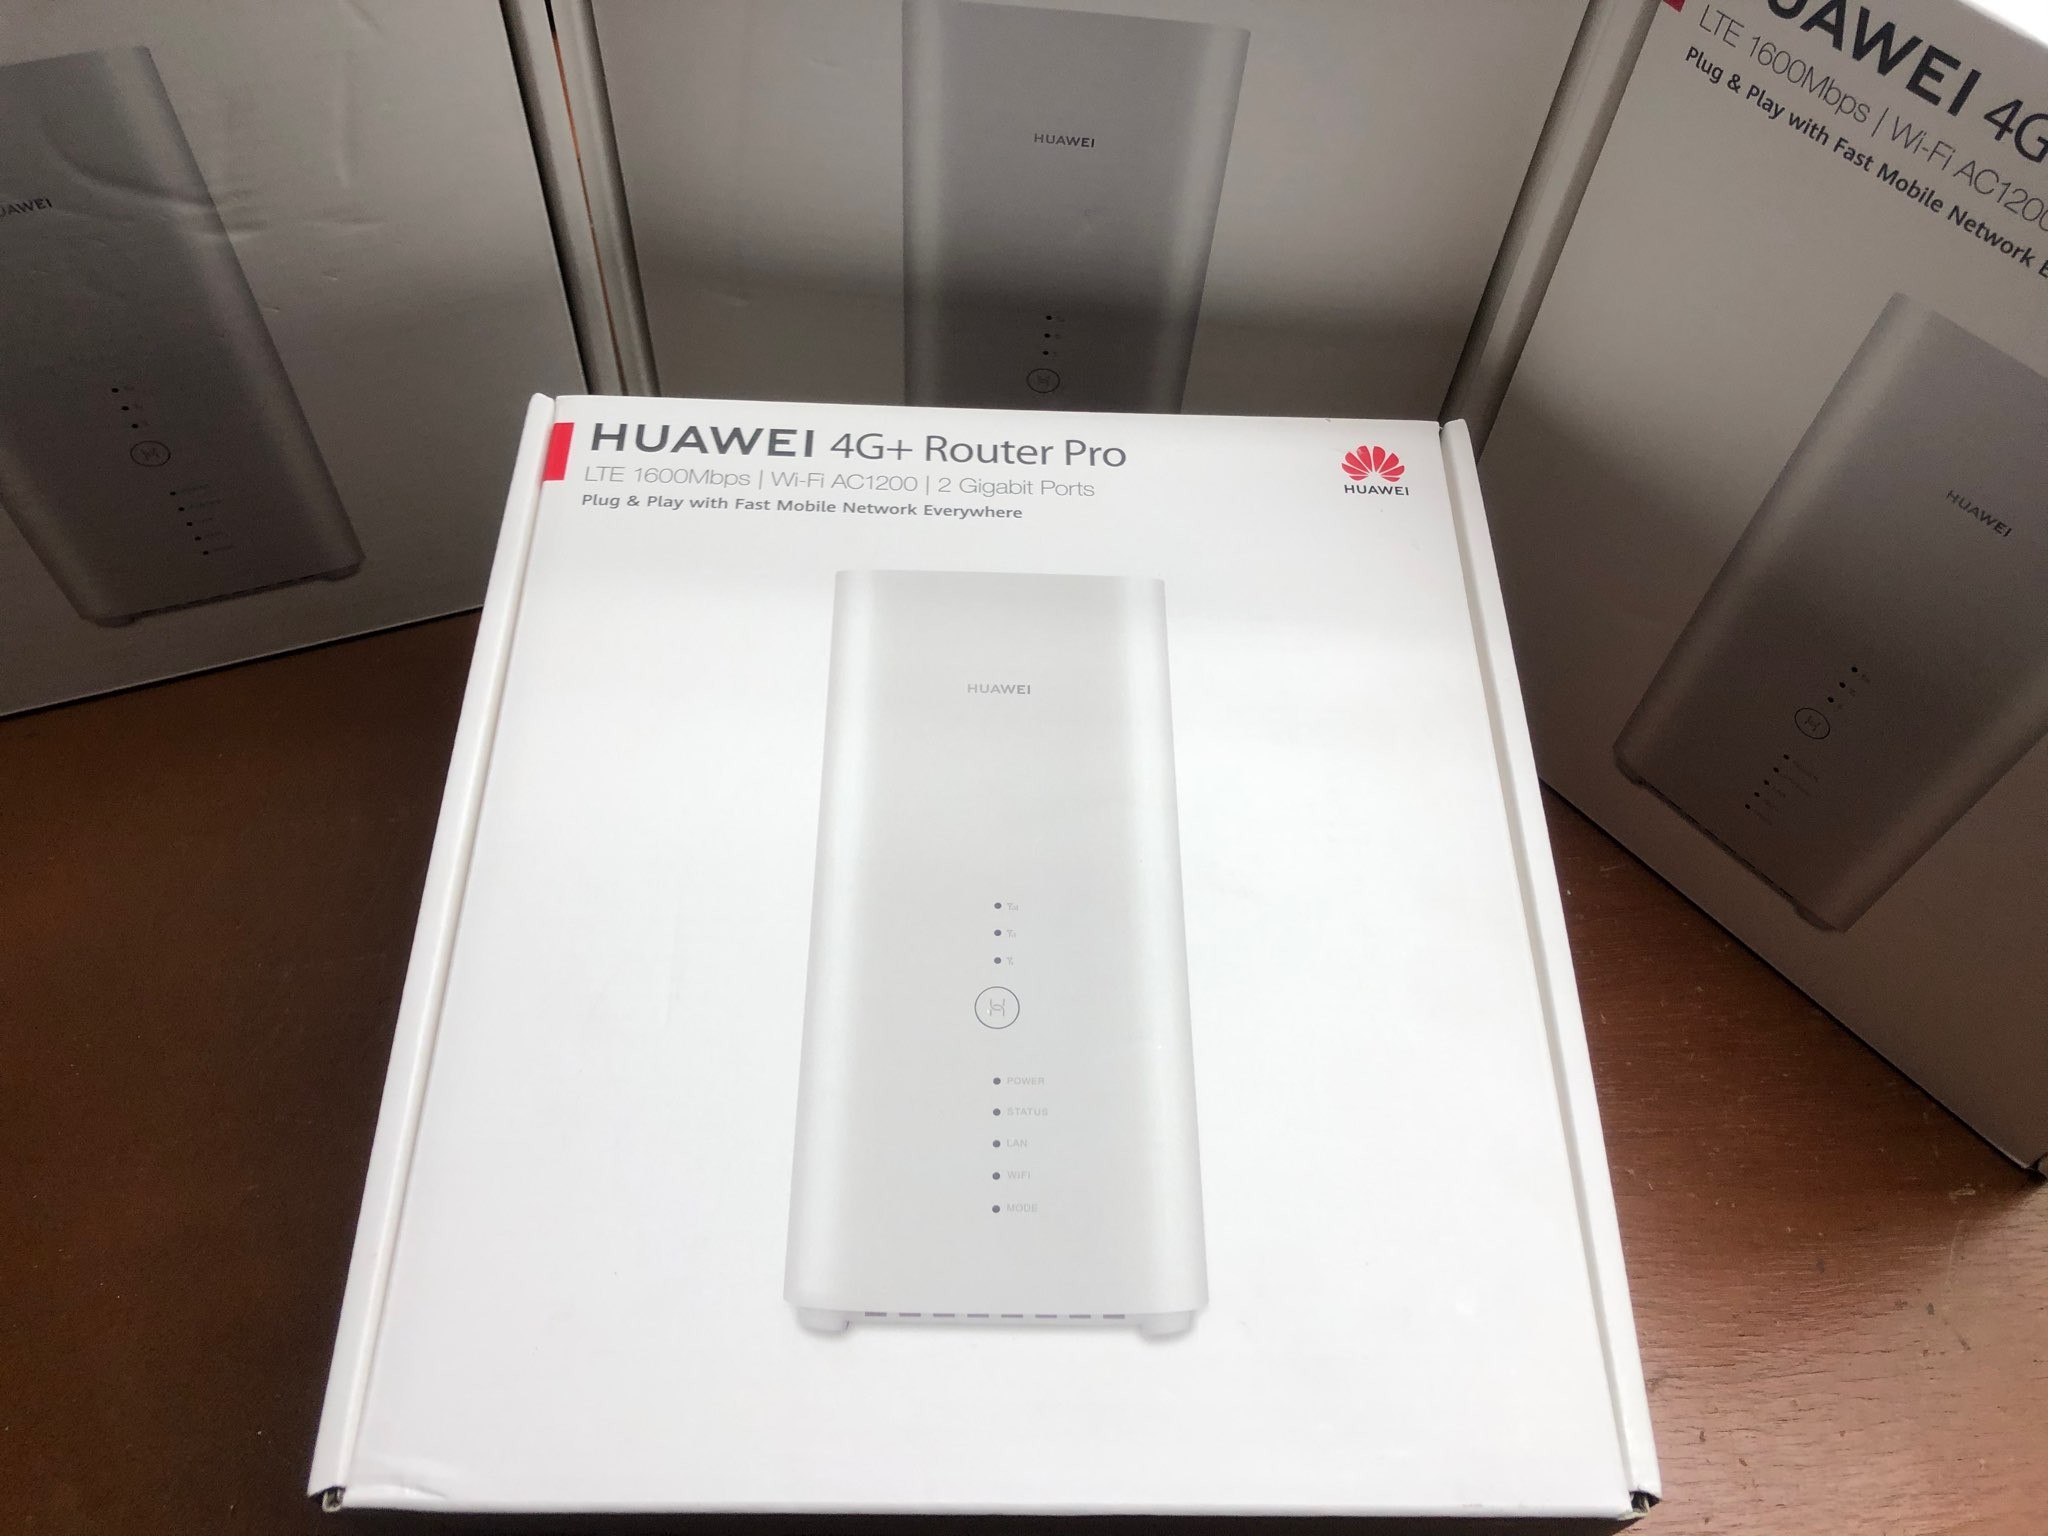 Huawei B818 LTE Wireless Gateway Modem Router